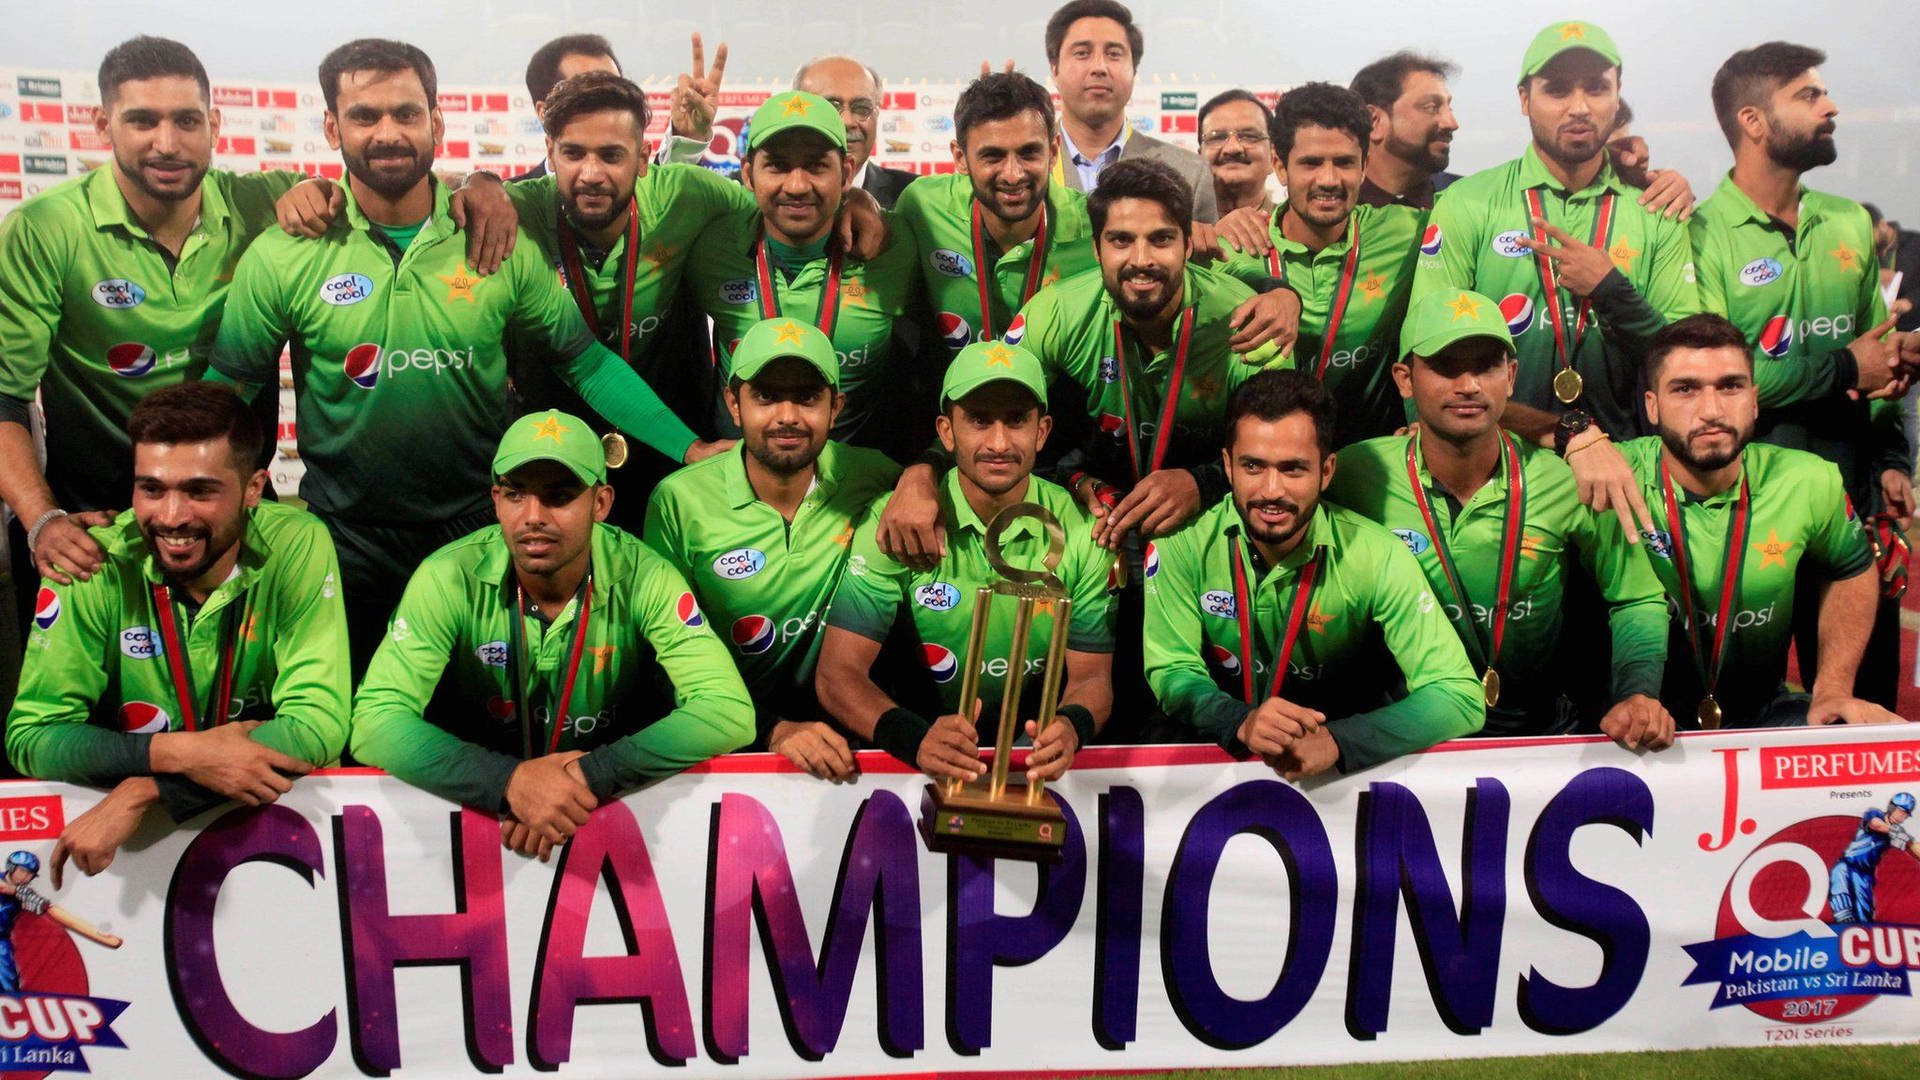 Pakistan Cricket Team Champions Triumph